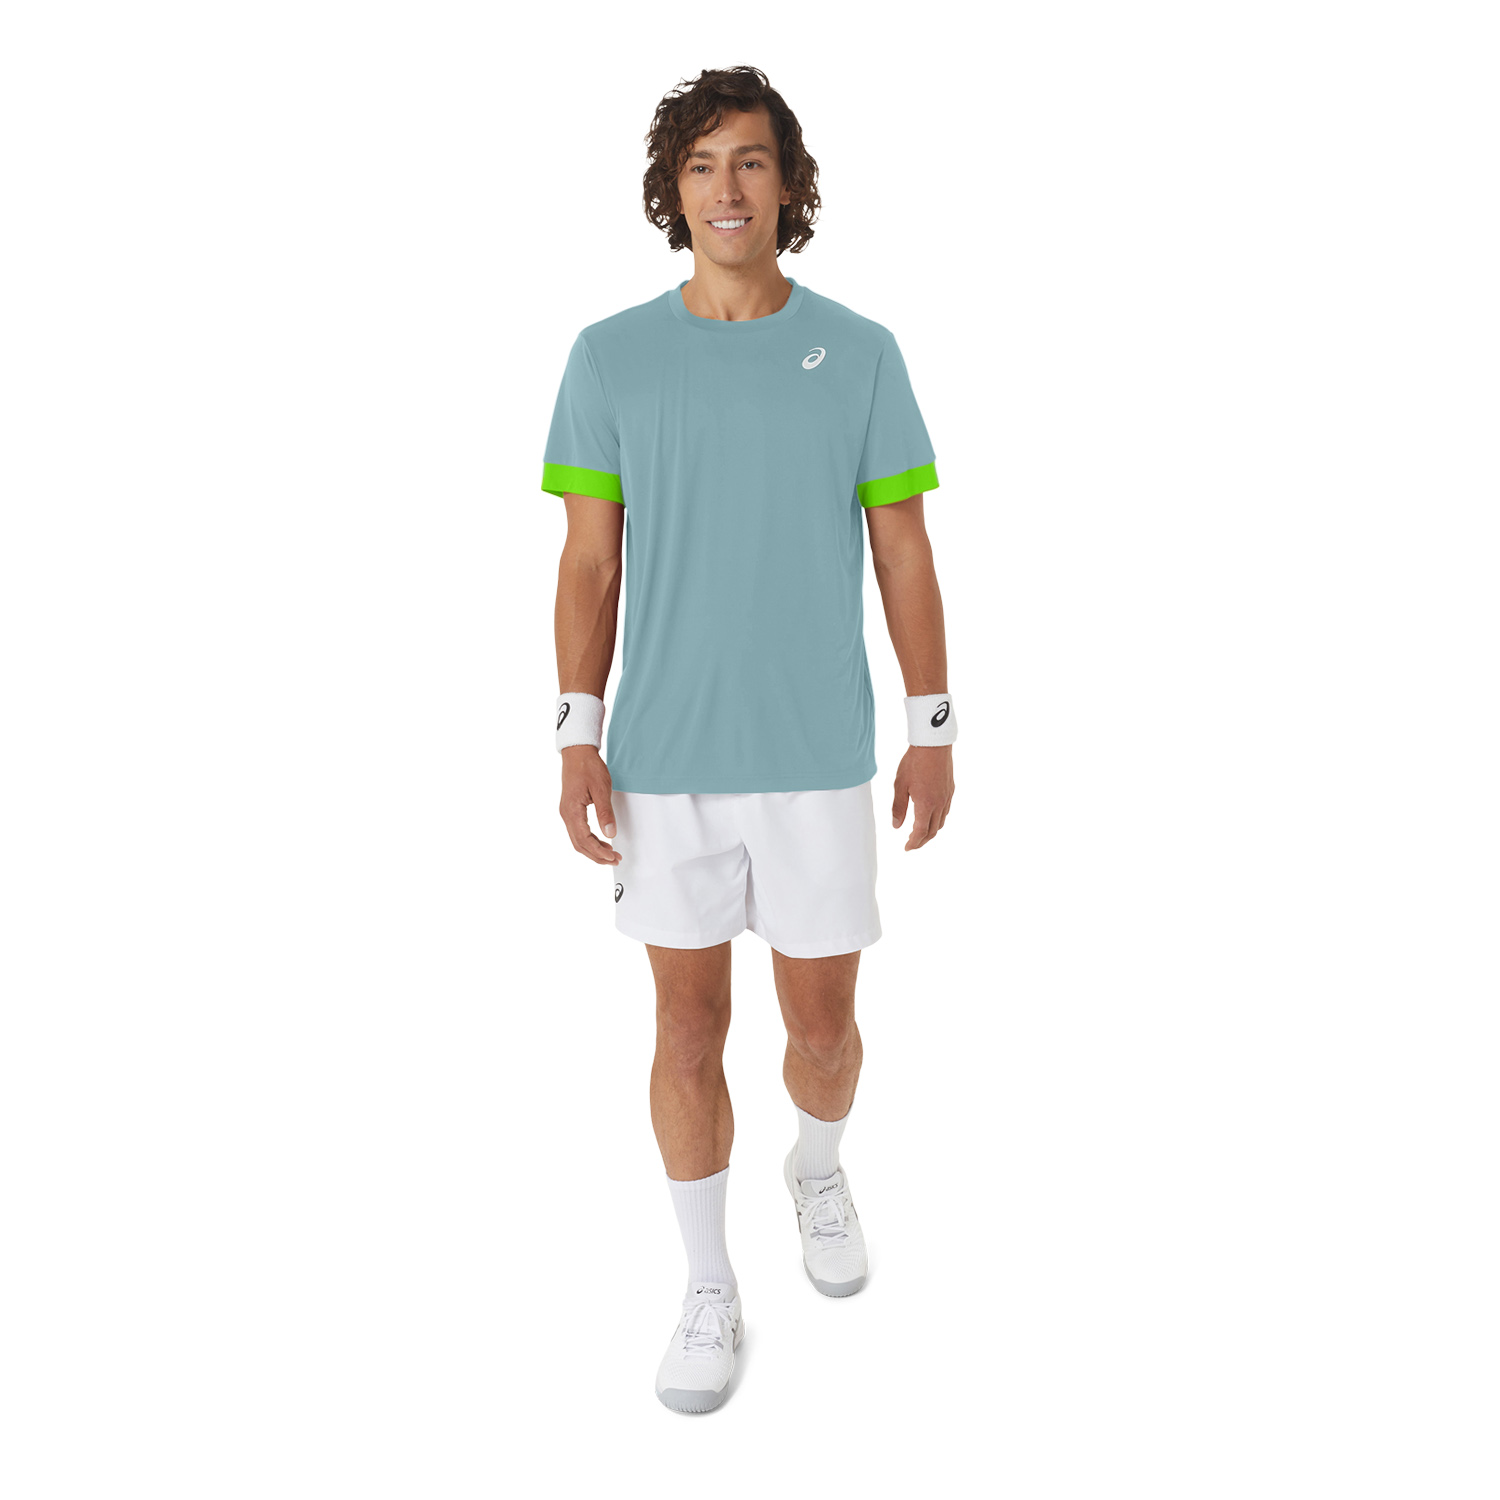 Asics Court T-Shirt - Teal Tint/Electric Lime